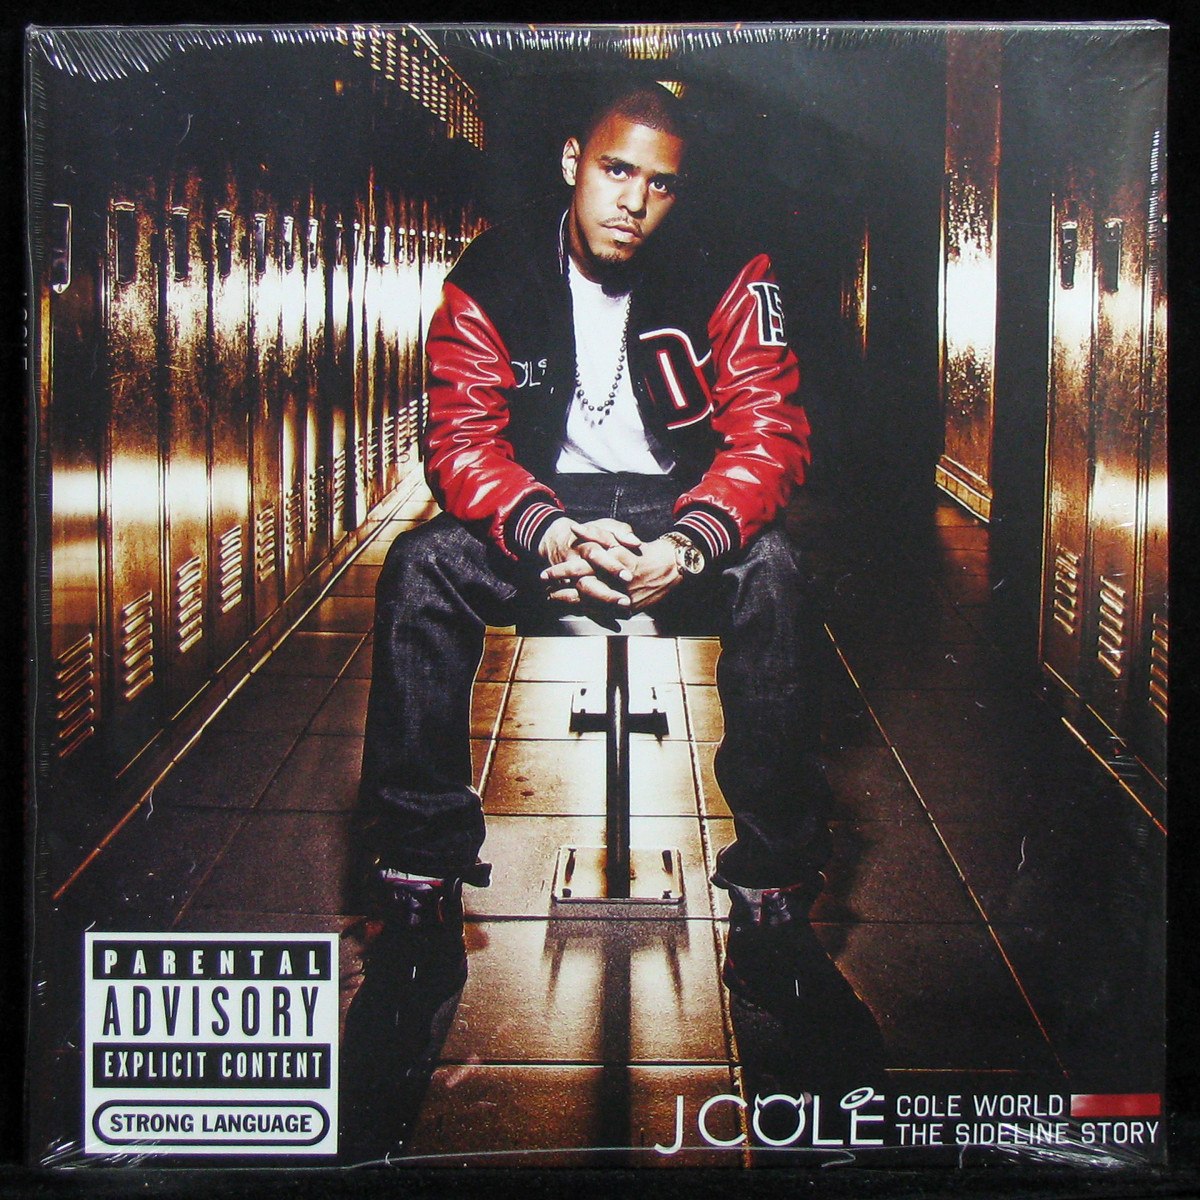 Cole World : Sideline Story